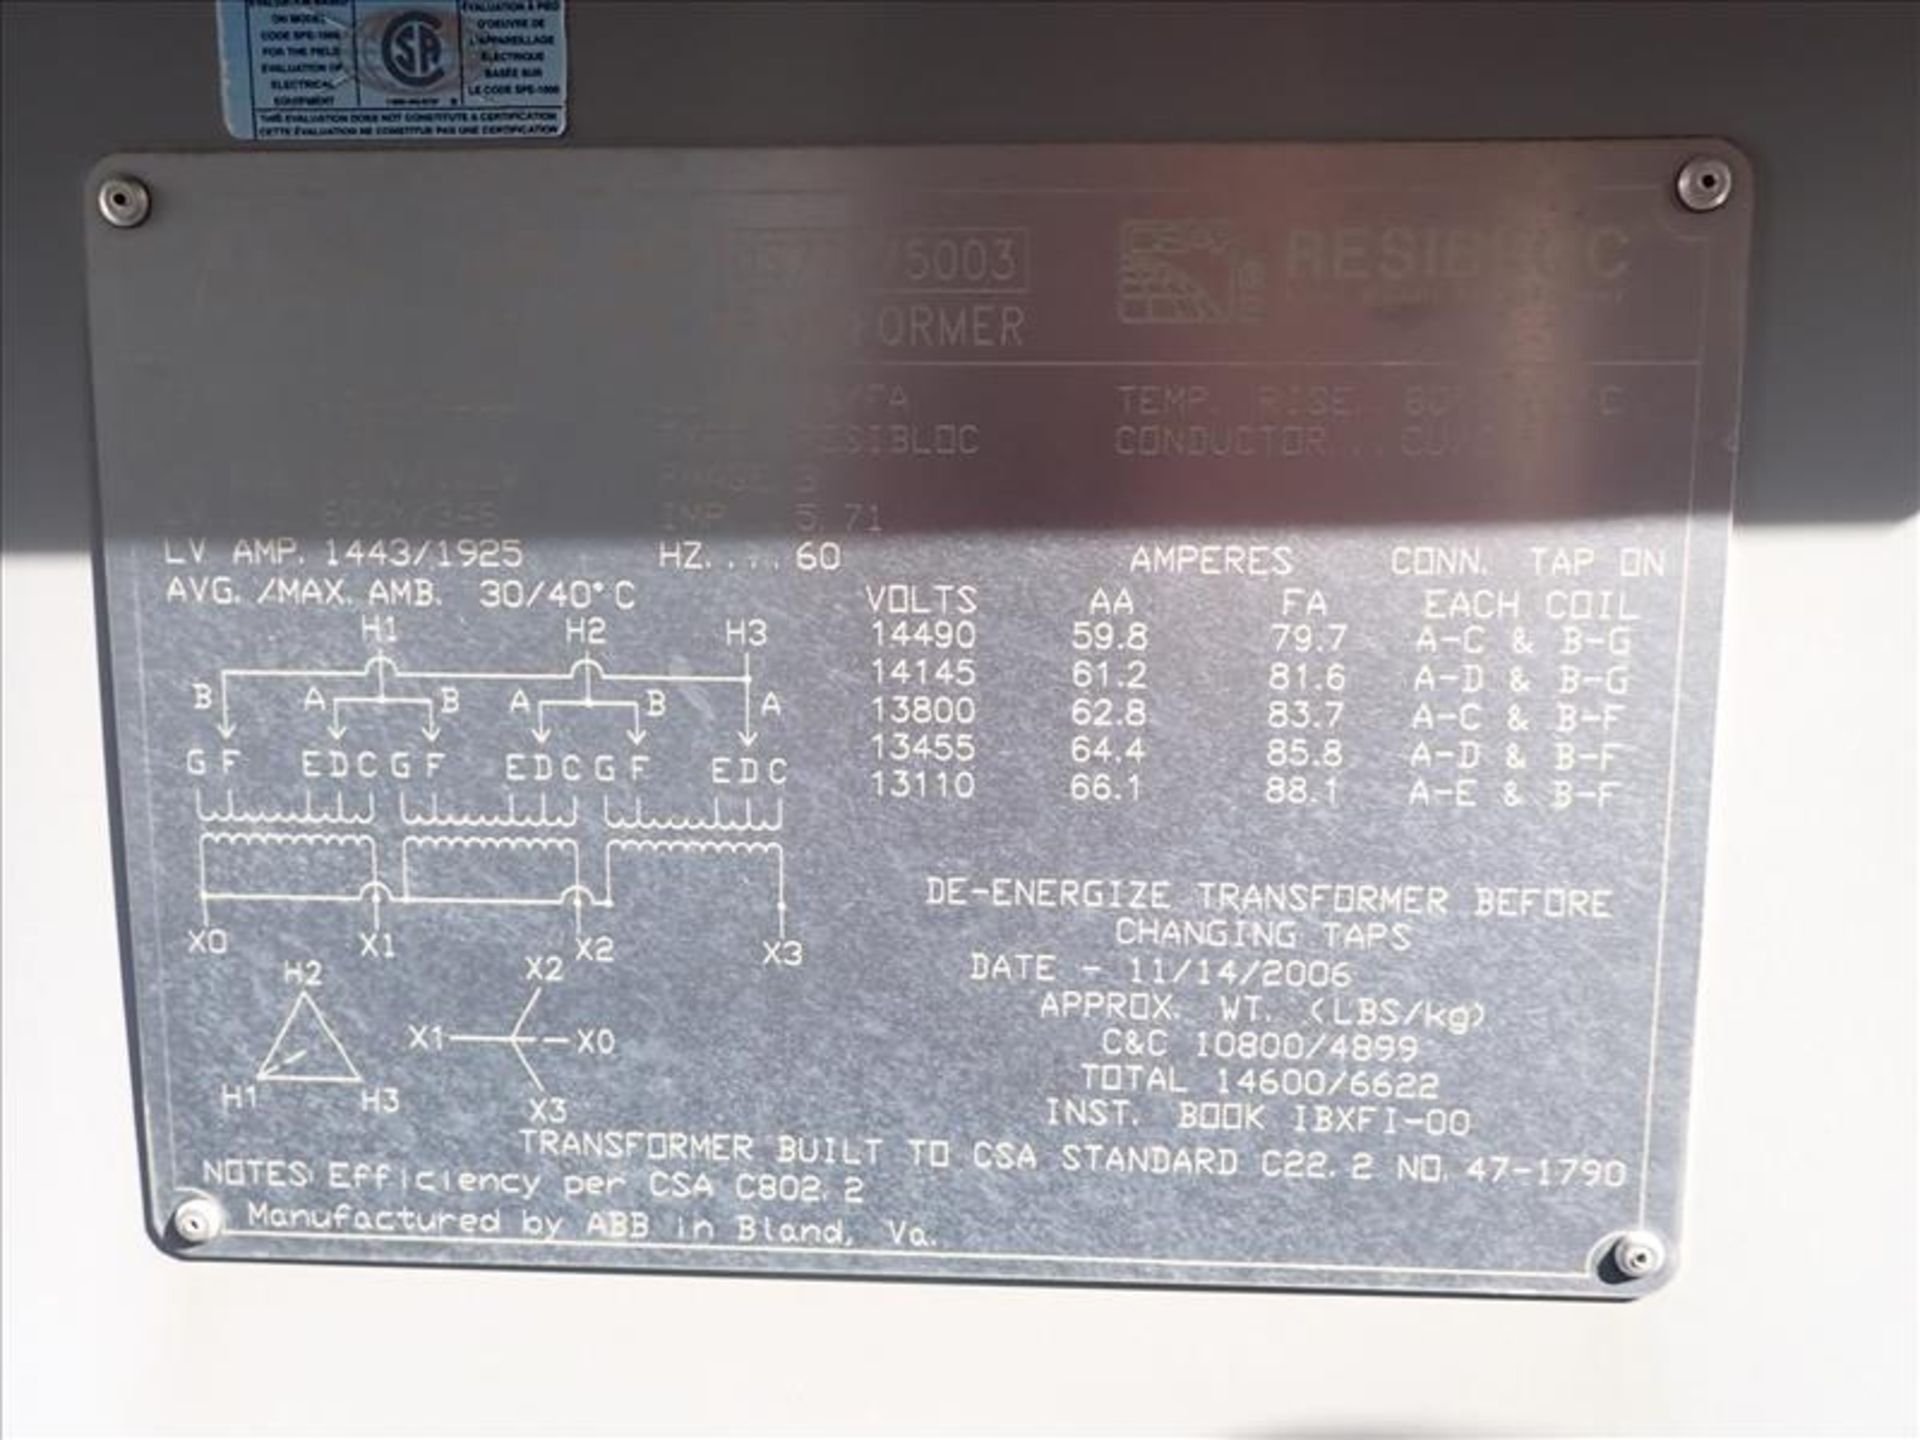 ABB ResiBloc Dry-Type Transformer, ser. no. DS77975003 (2006), 1500/2000KVA, 60Hz, 3Ph, 600/346V, - Image 4 of 4